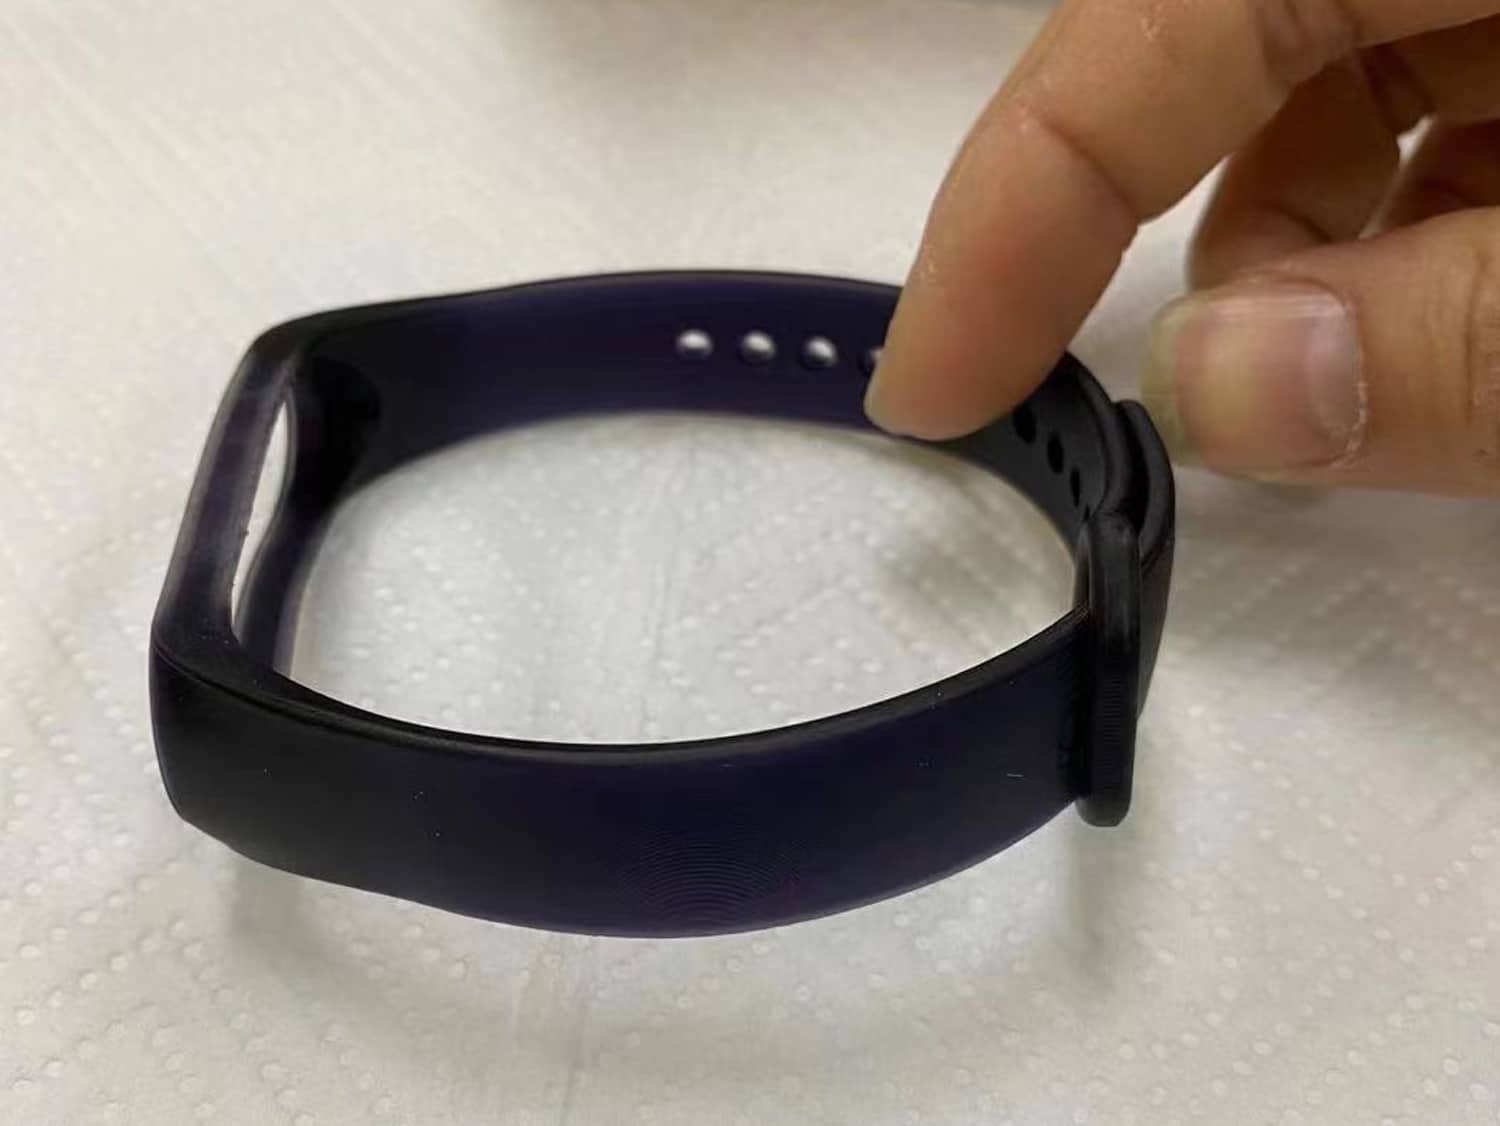 SLS 3D Printed TPU Wristband Model of Smart Watch - FacFox